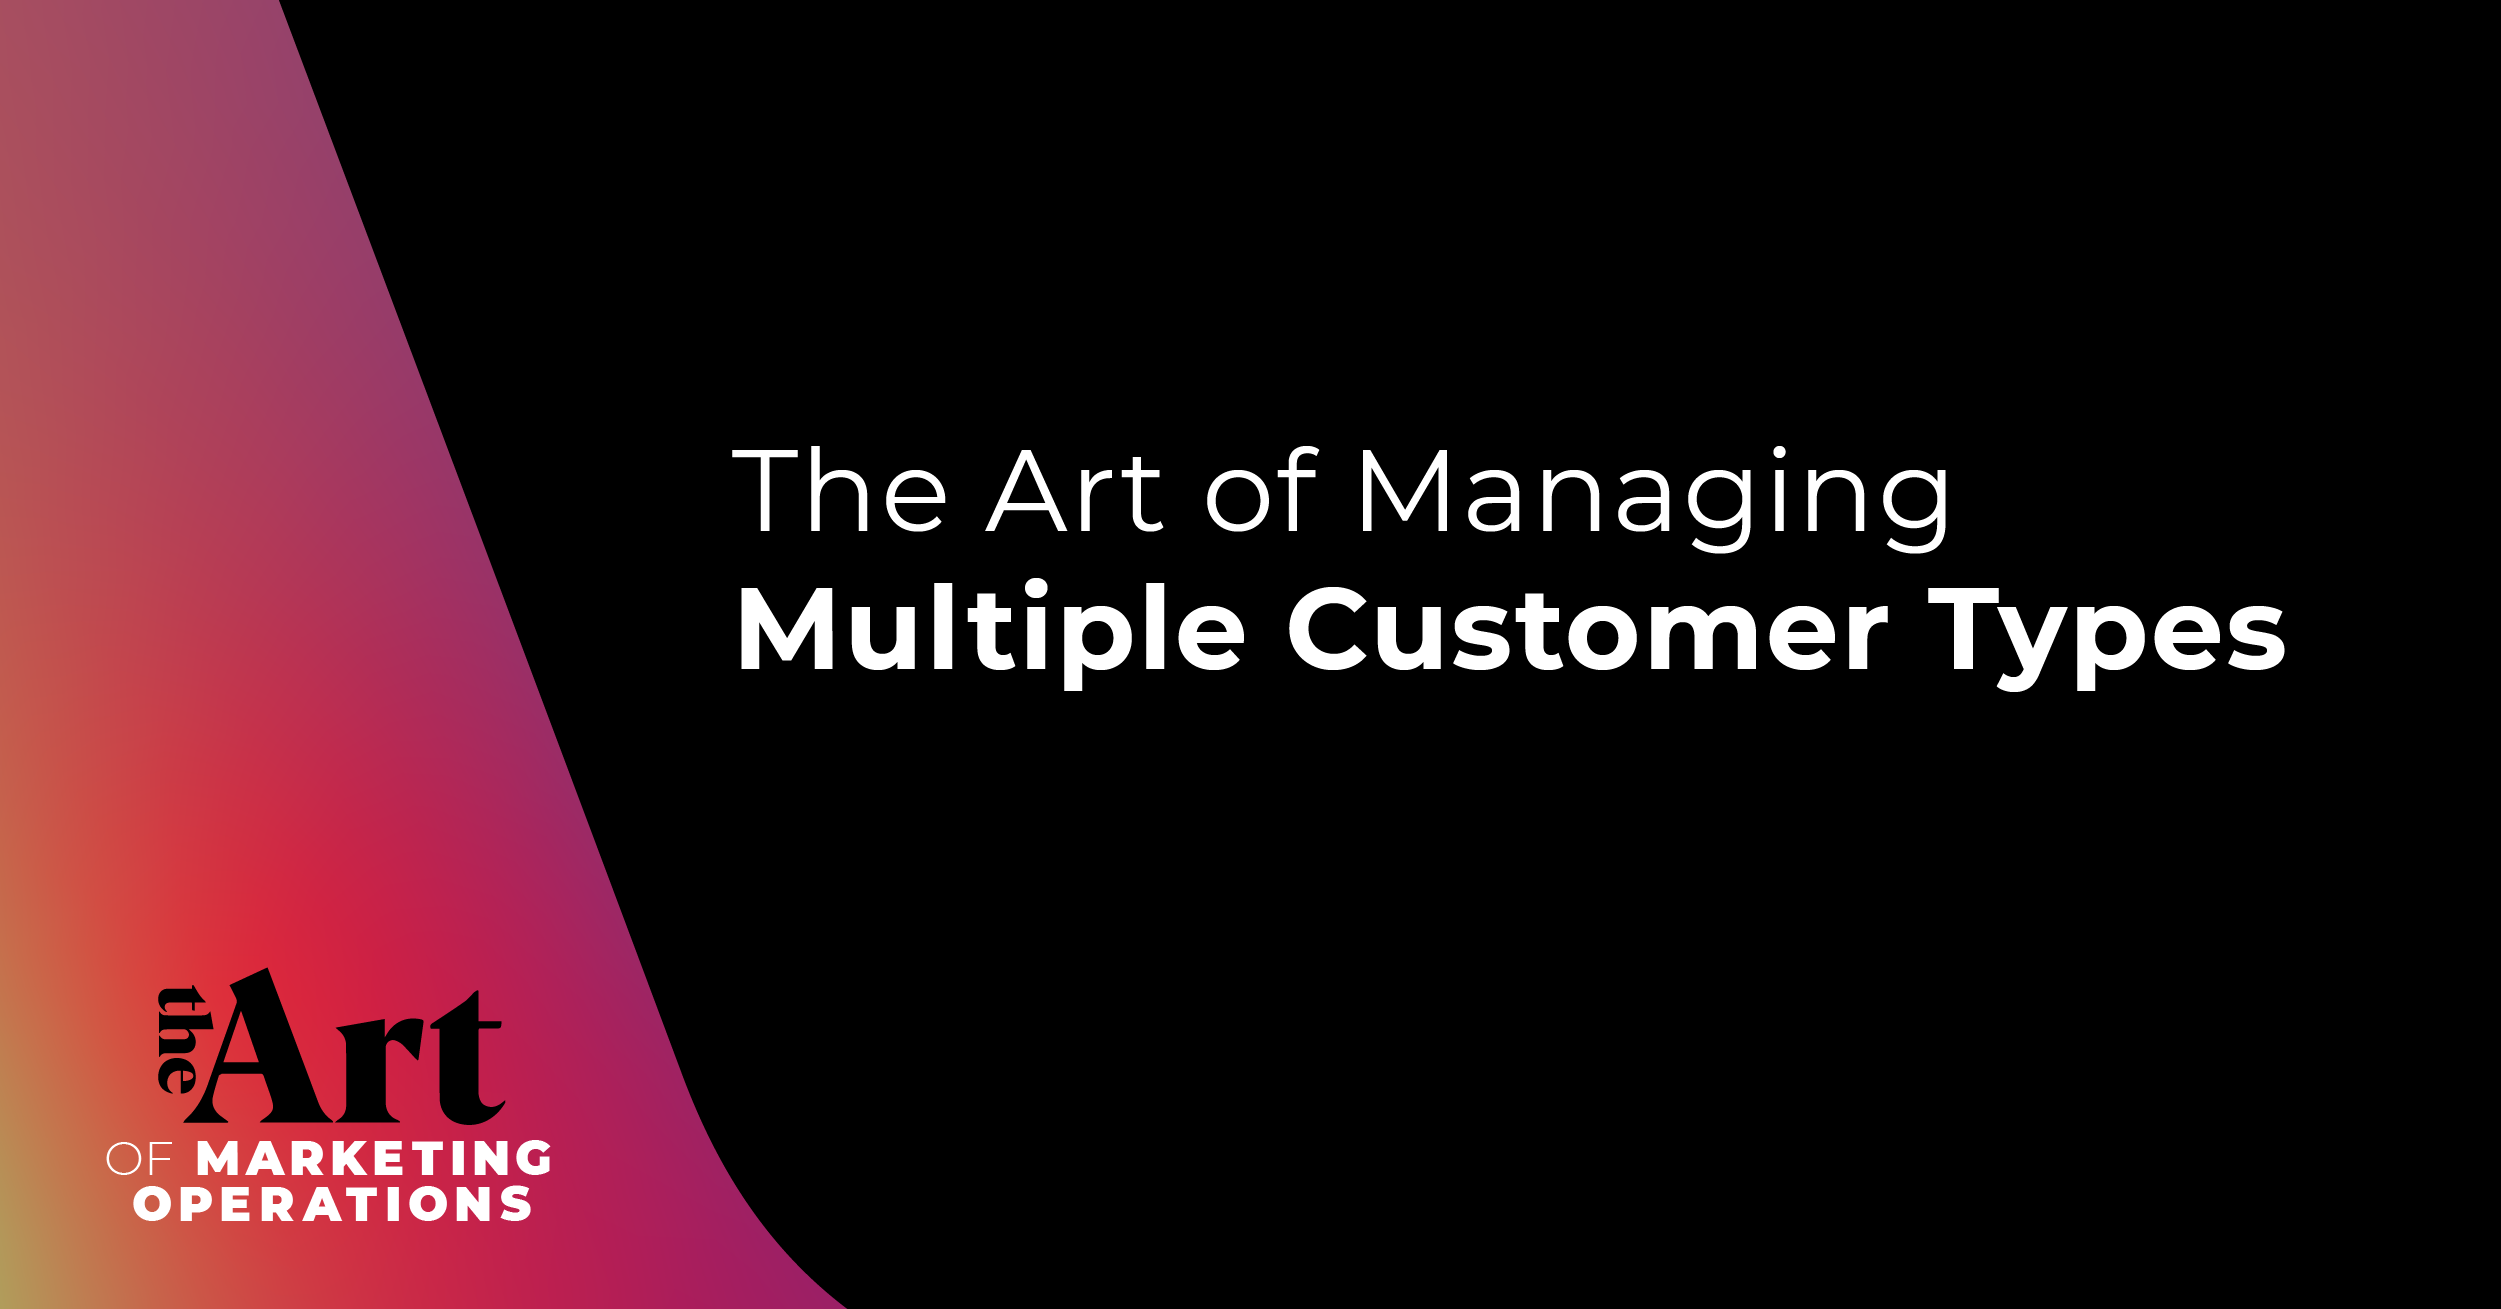 The Art of Managing Multiple Customer Types